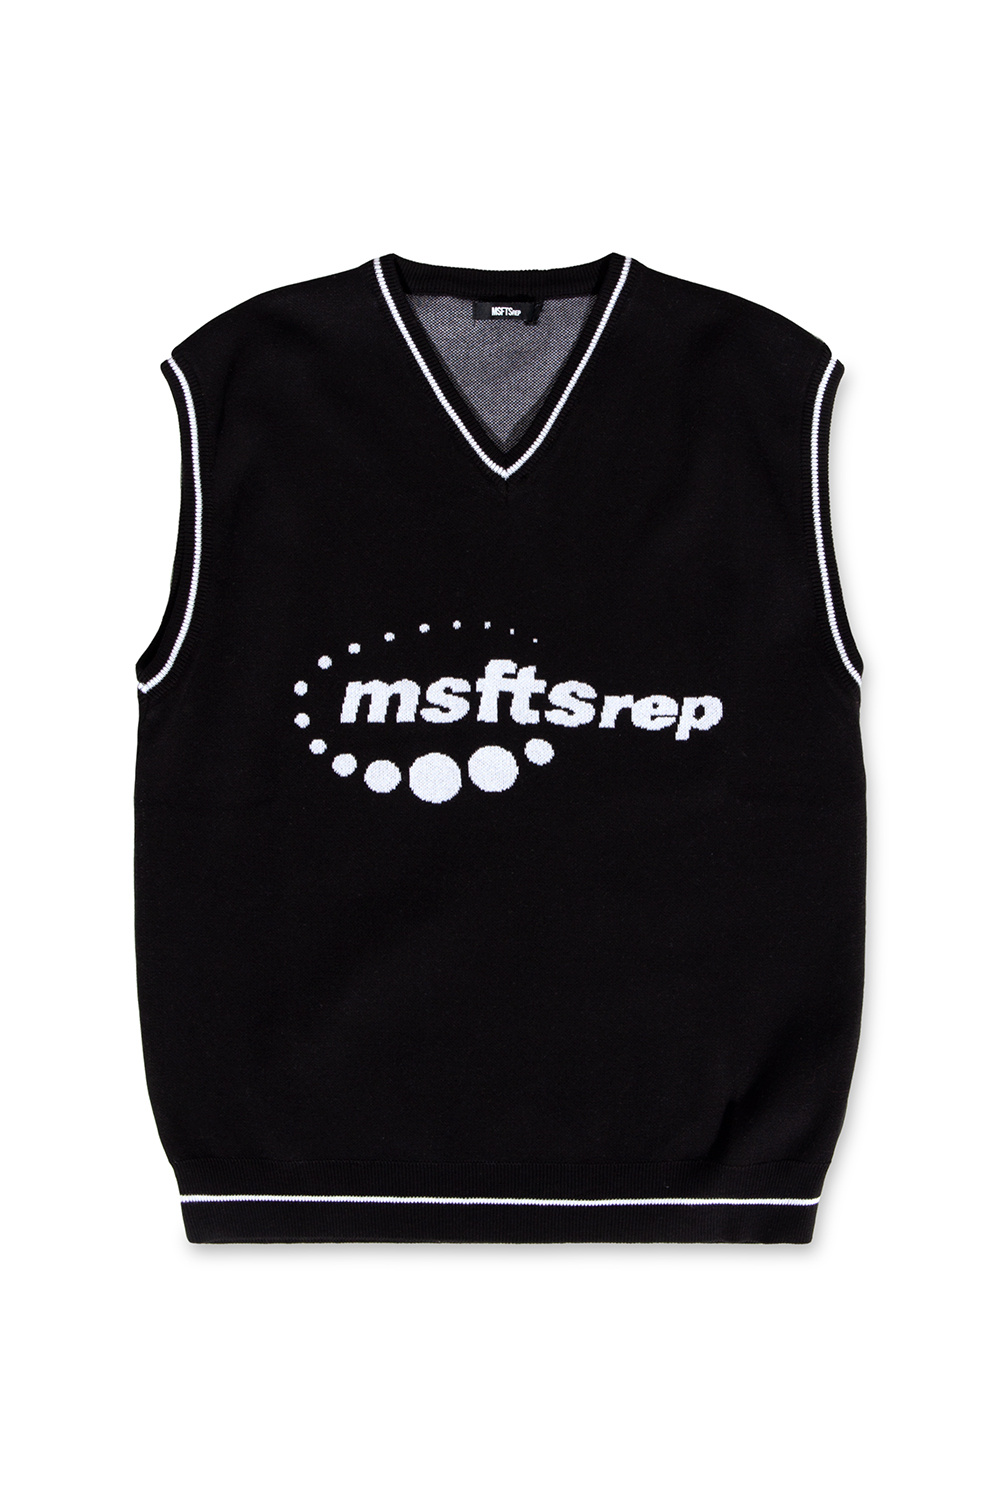 MSFTSrep Sleeveless sweater